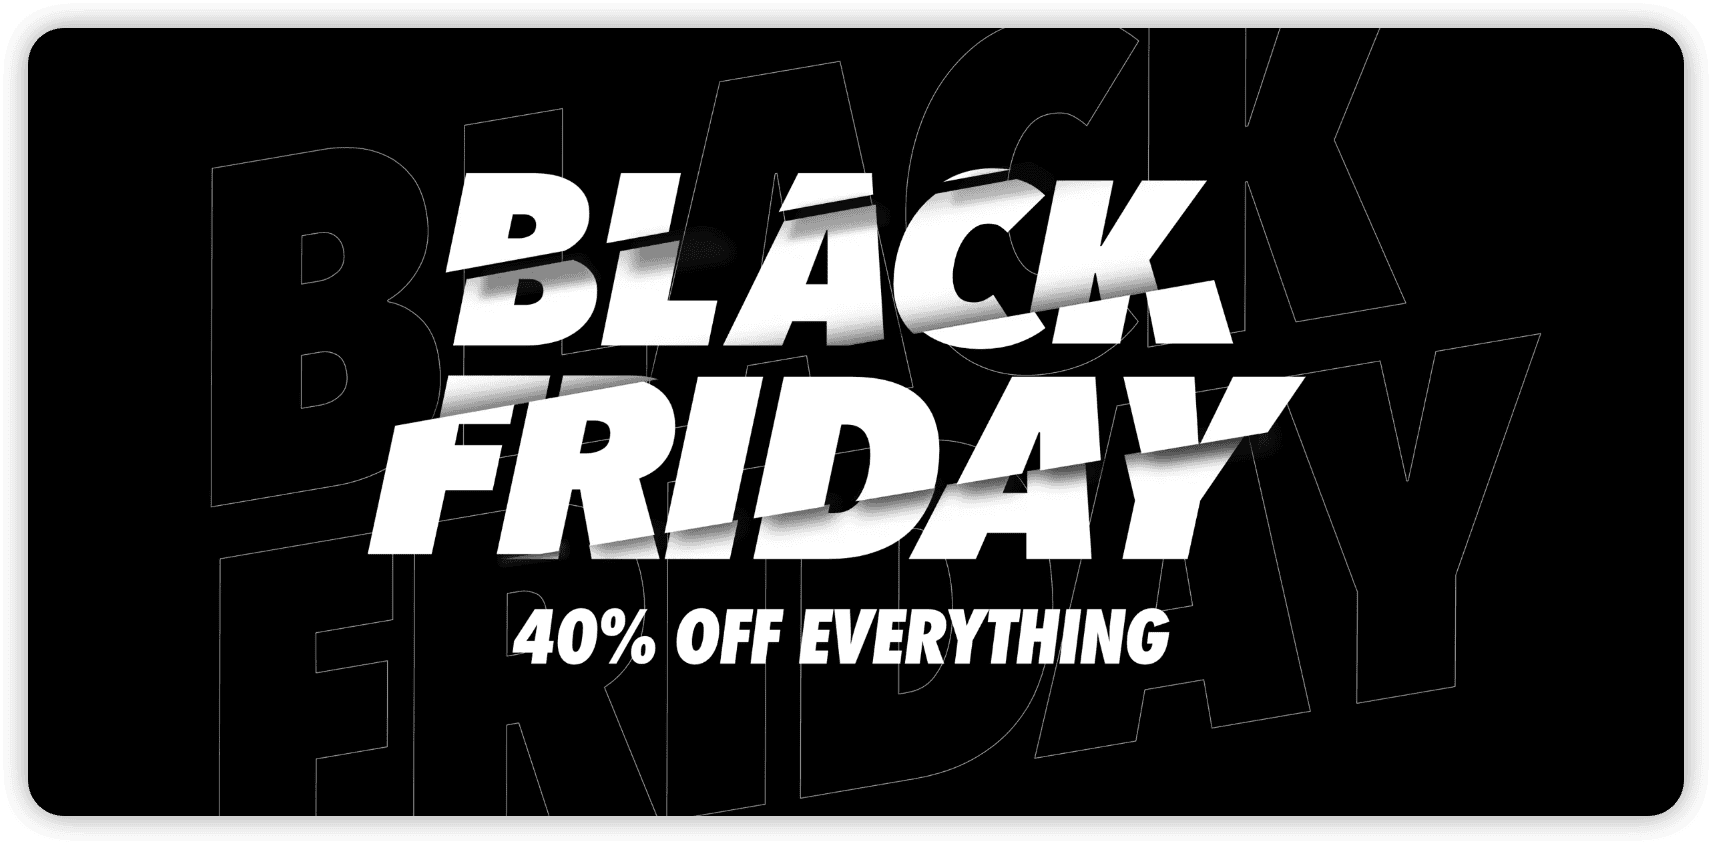 Affinity Black Friday Sale